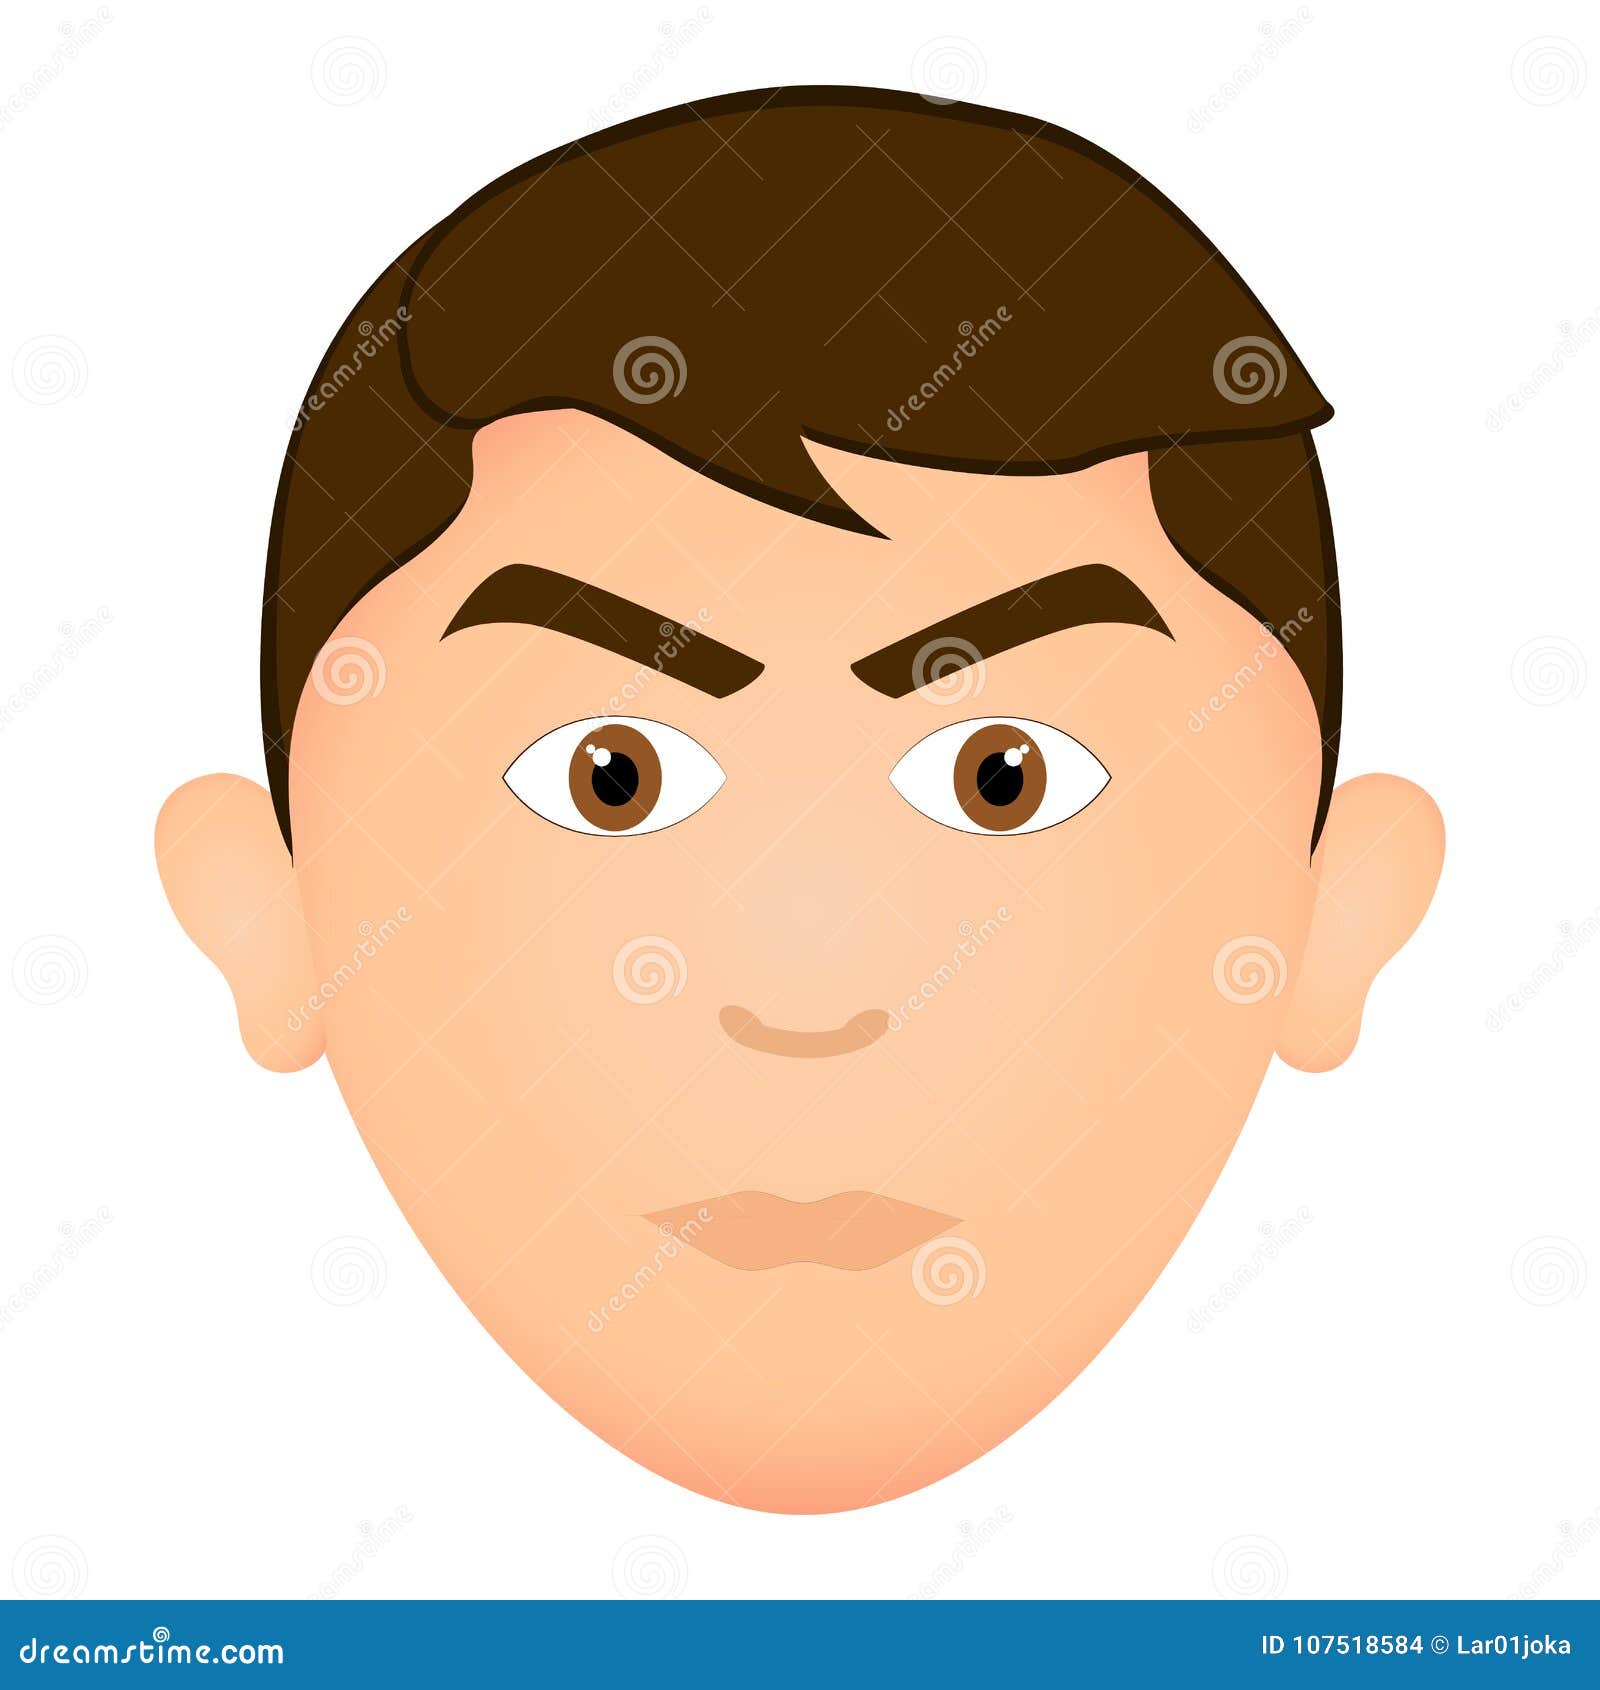 Angry man avatar stock vector. Illustration of flat - 107518584